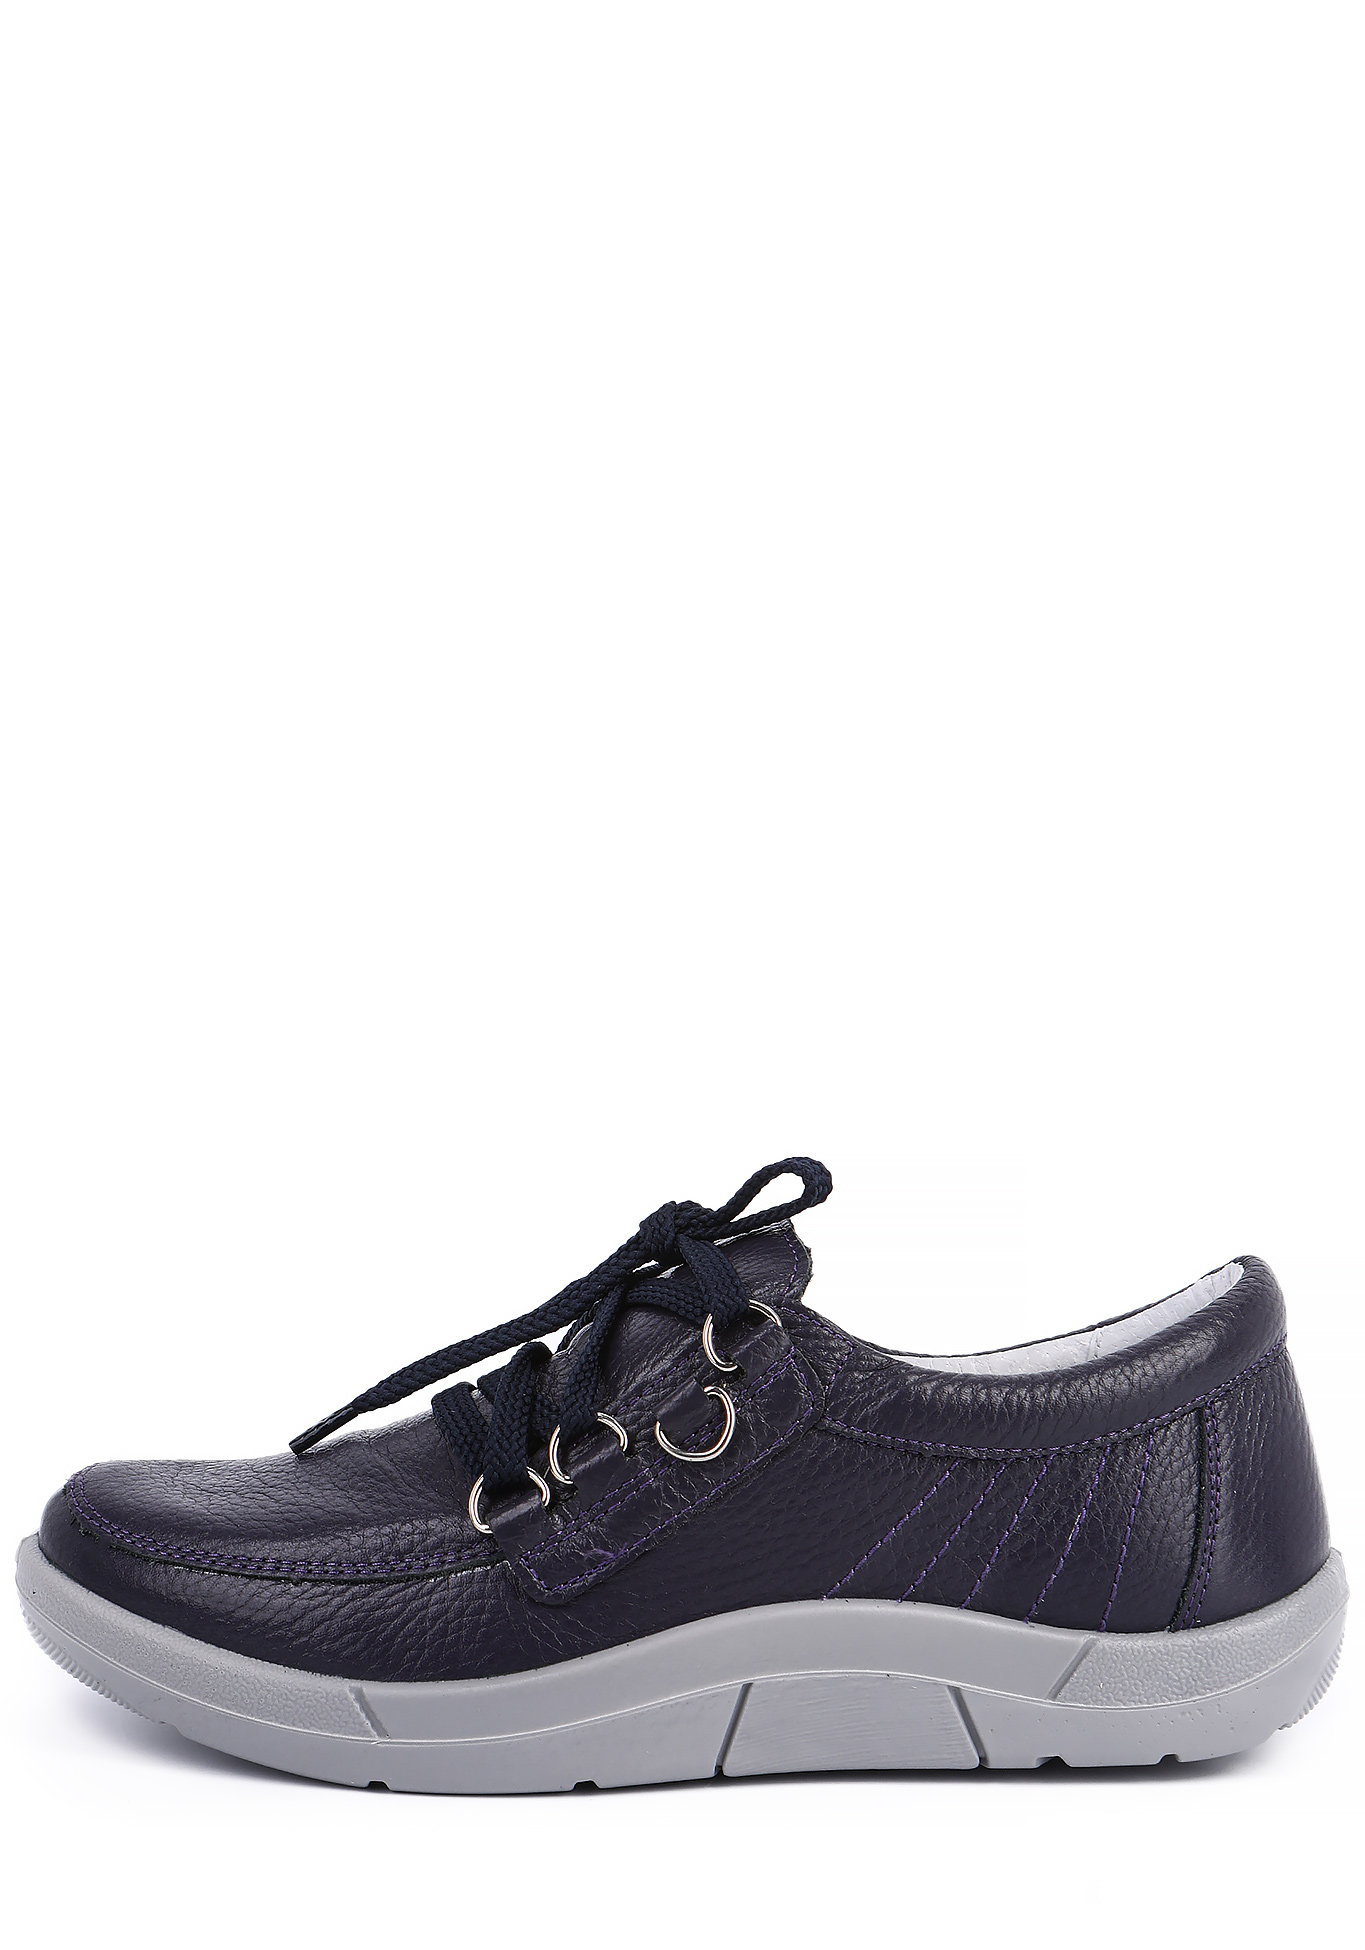 Ботинки женские "Филлис" Almi, размер 36, цвет тёмно-серый - фото 3